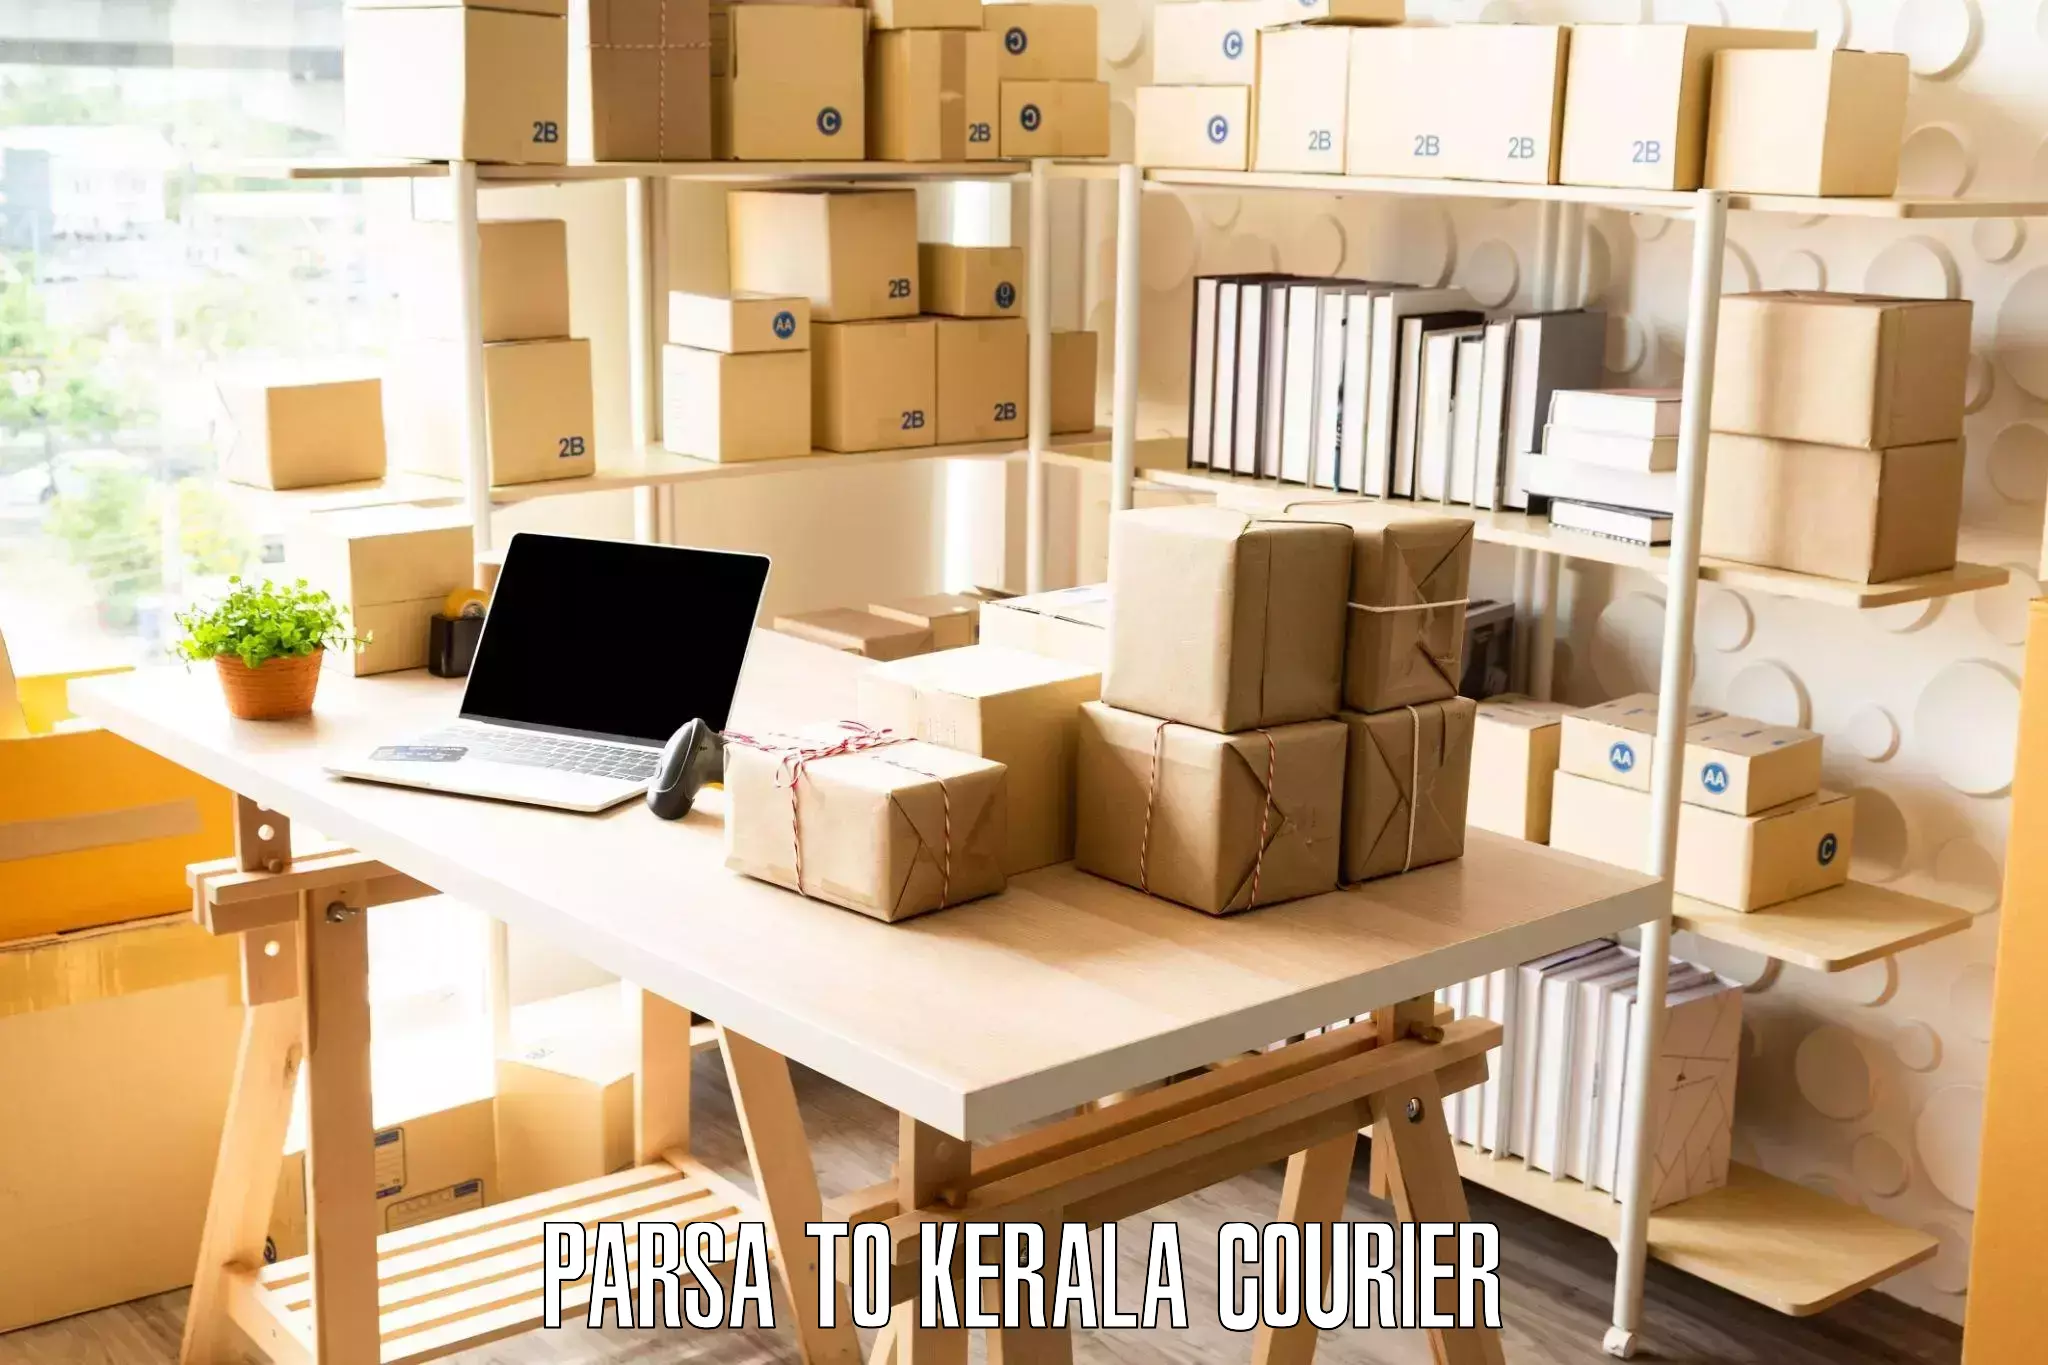 Professional moving company Parsa to Kerala